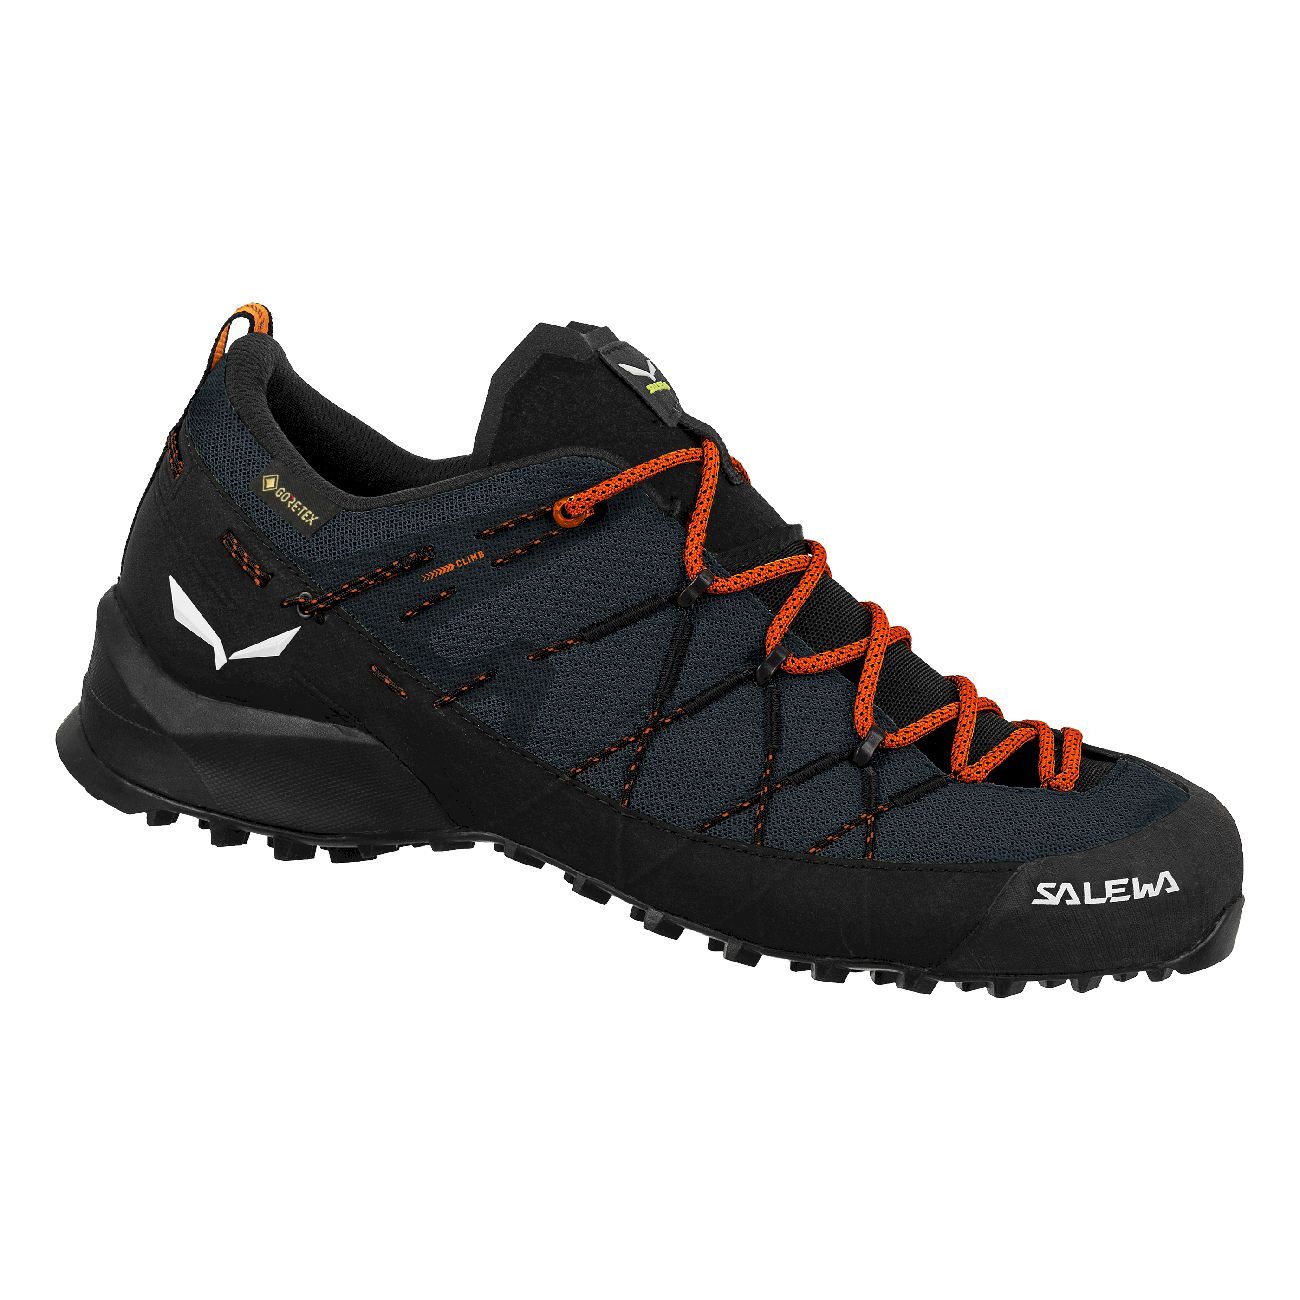 Salewa Wildfire 2 GTX - Approach shoes - Men's